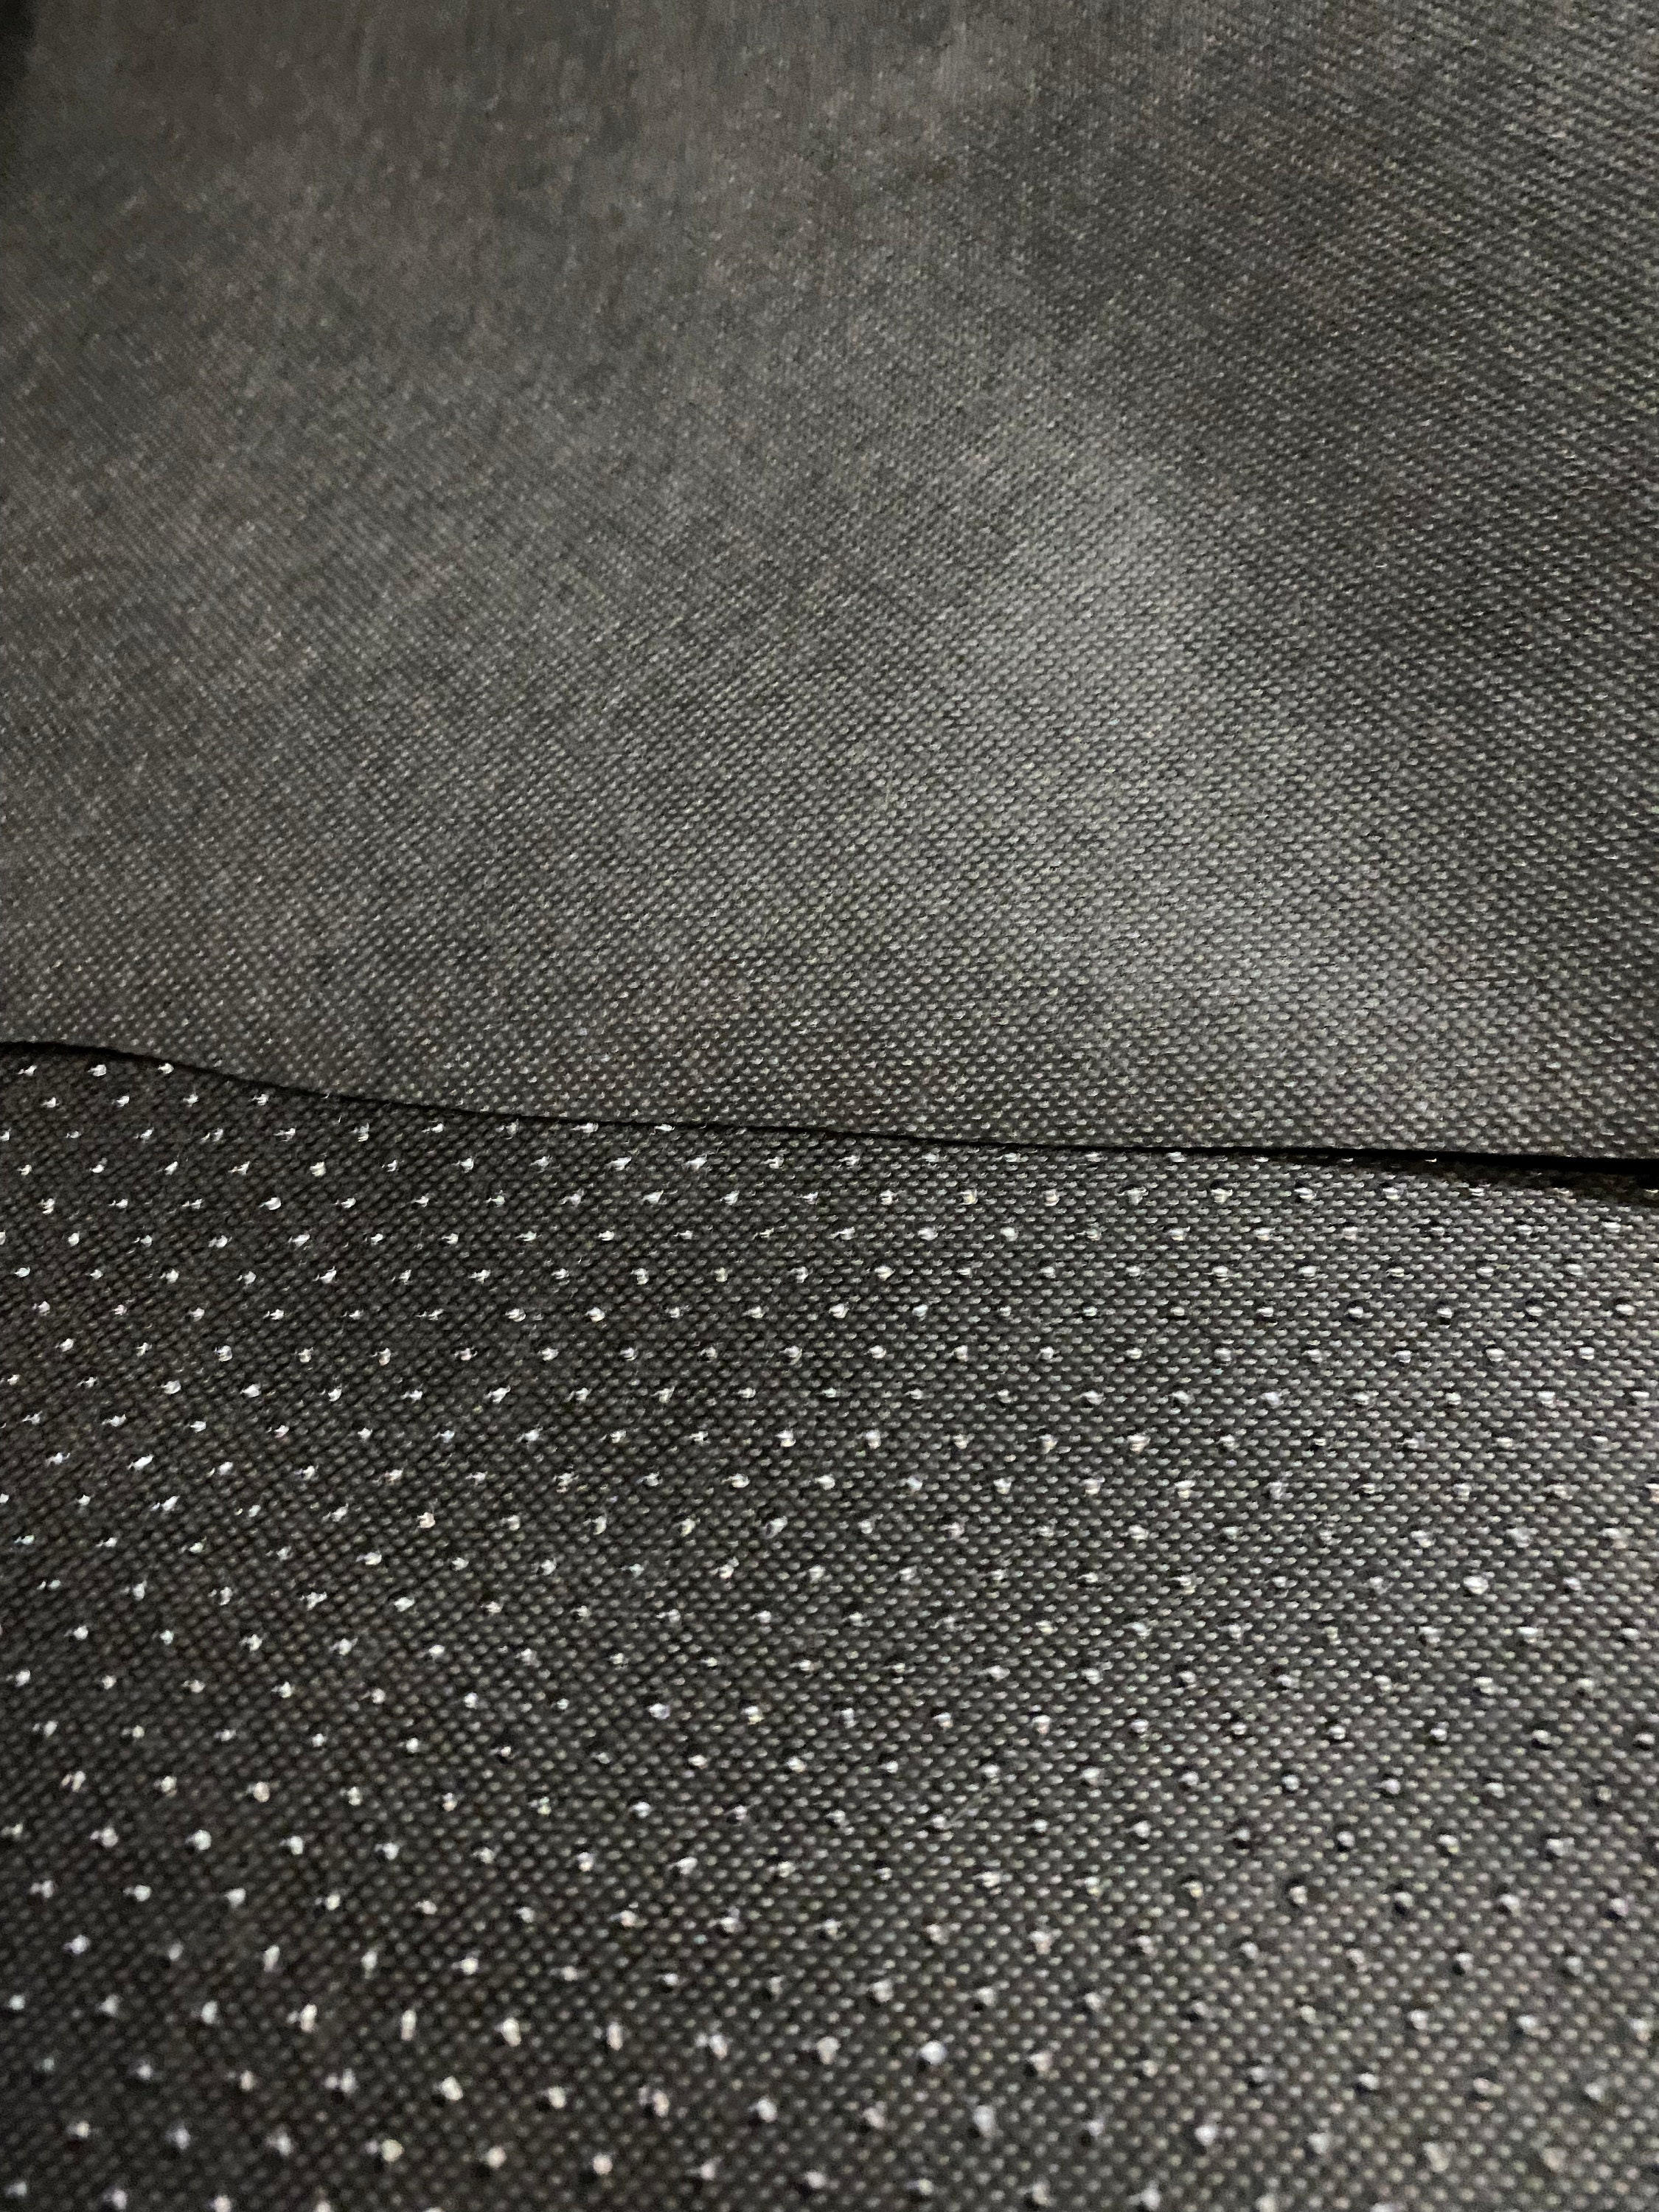 Dotted Non Slip Fabric, Anti Slip Fabric, Grip Fabric, Non Skid